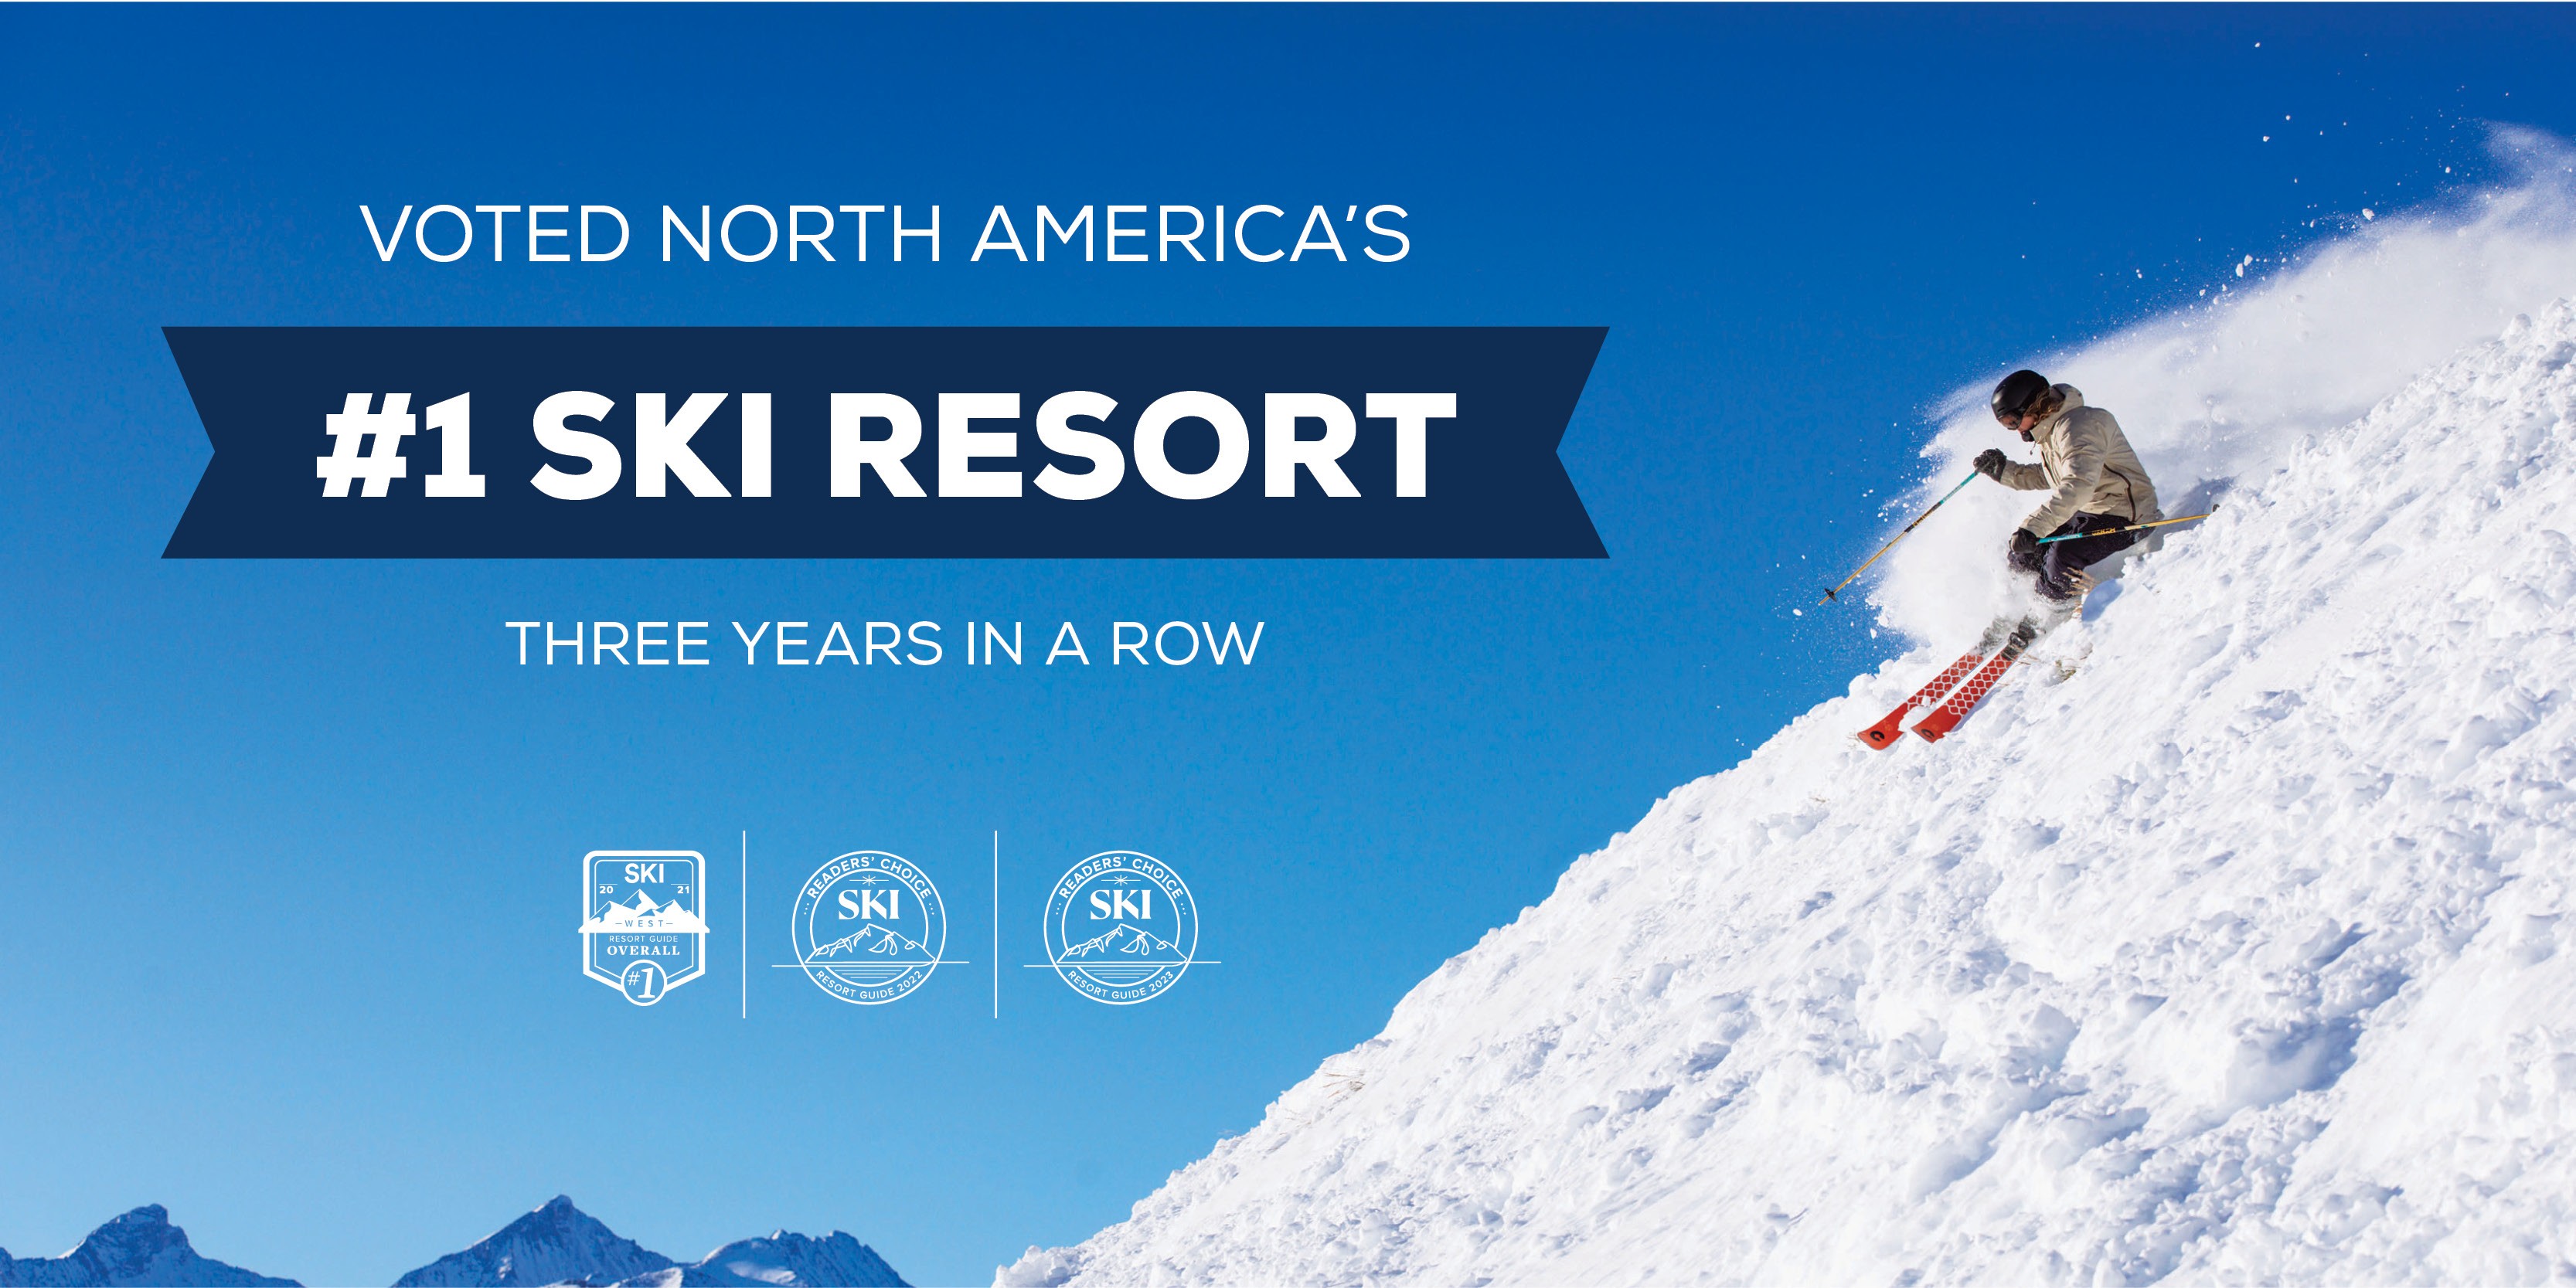 Sun Valley Resort Voted North America's #1 Ski Resort Three Years In a Row by SKI Magazine